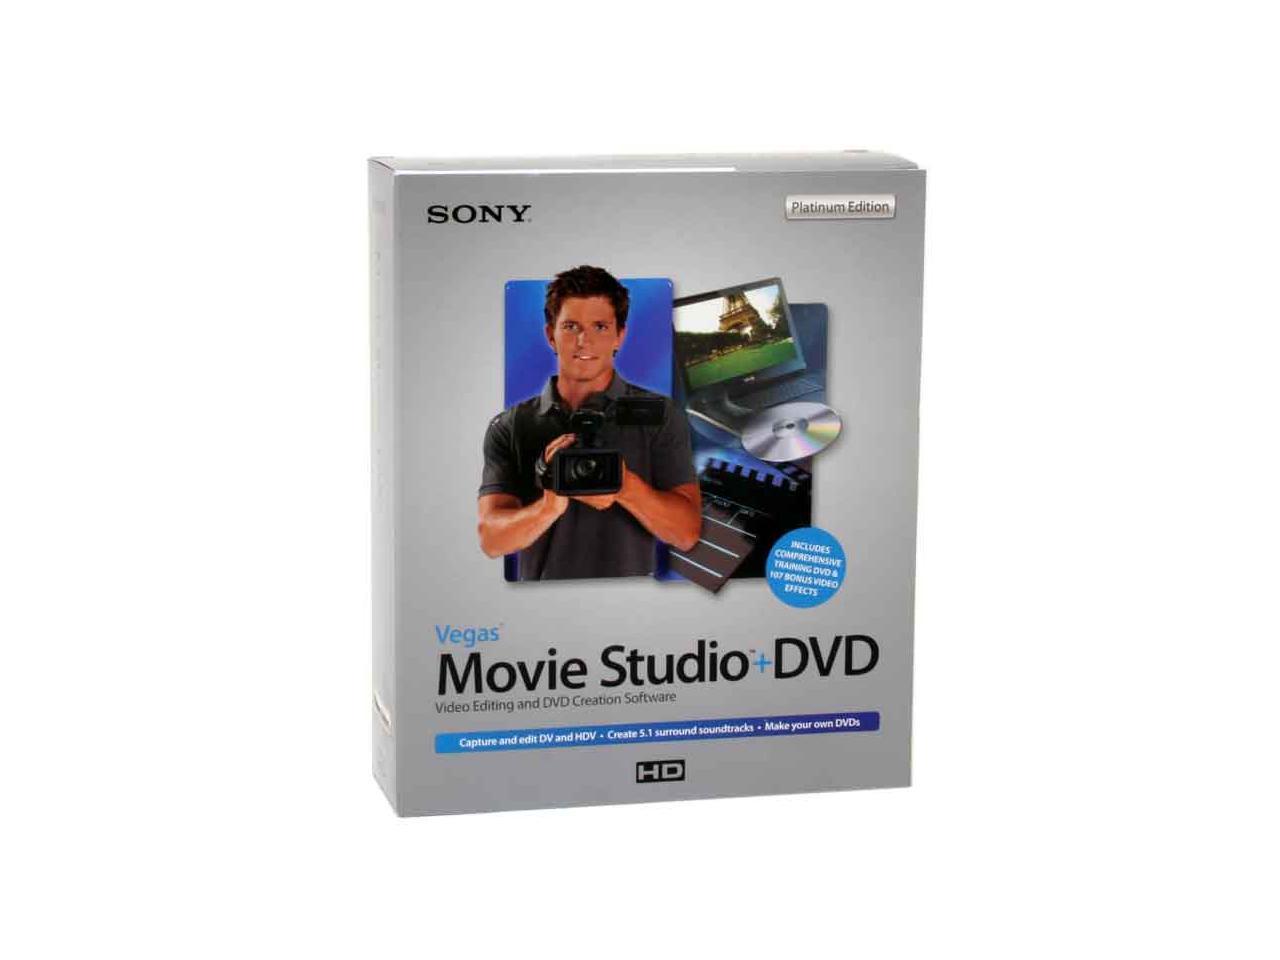 Sony Vegas Movie Studio 7 Dvd Platinum Edition Newegg Com